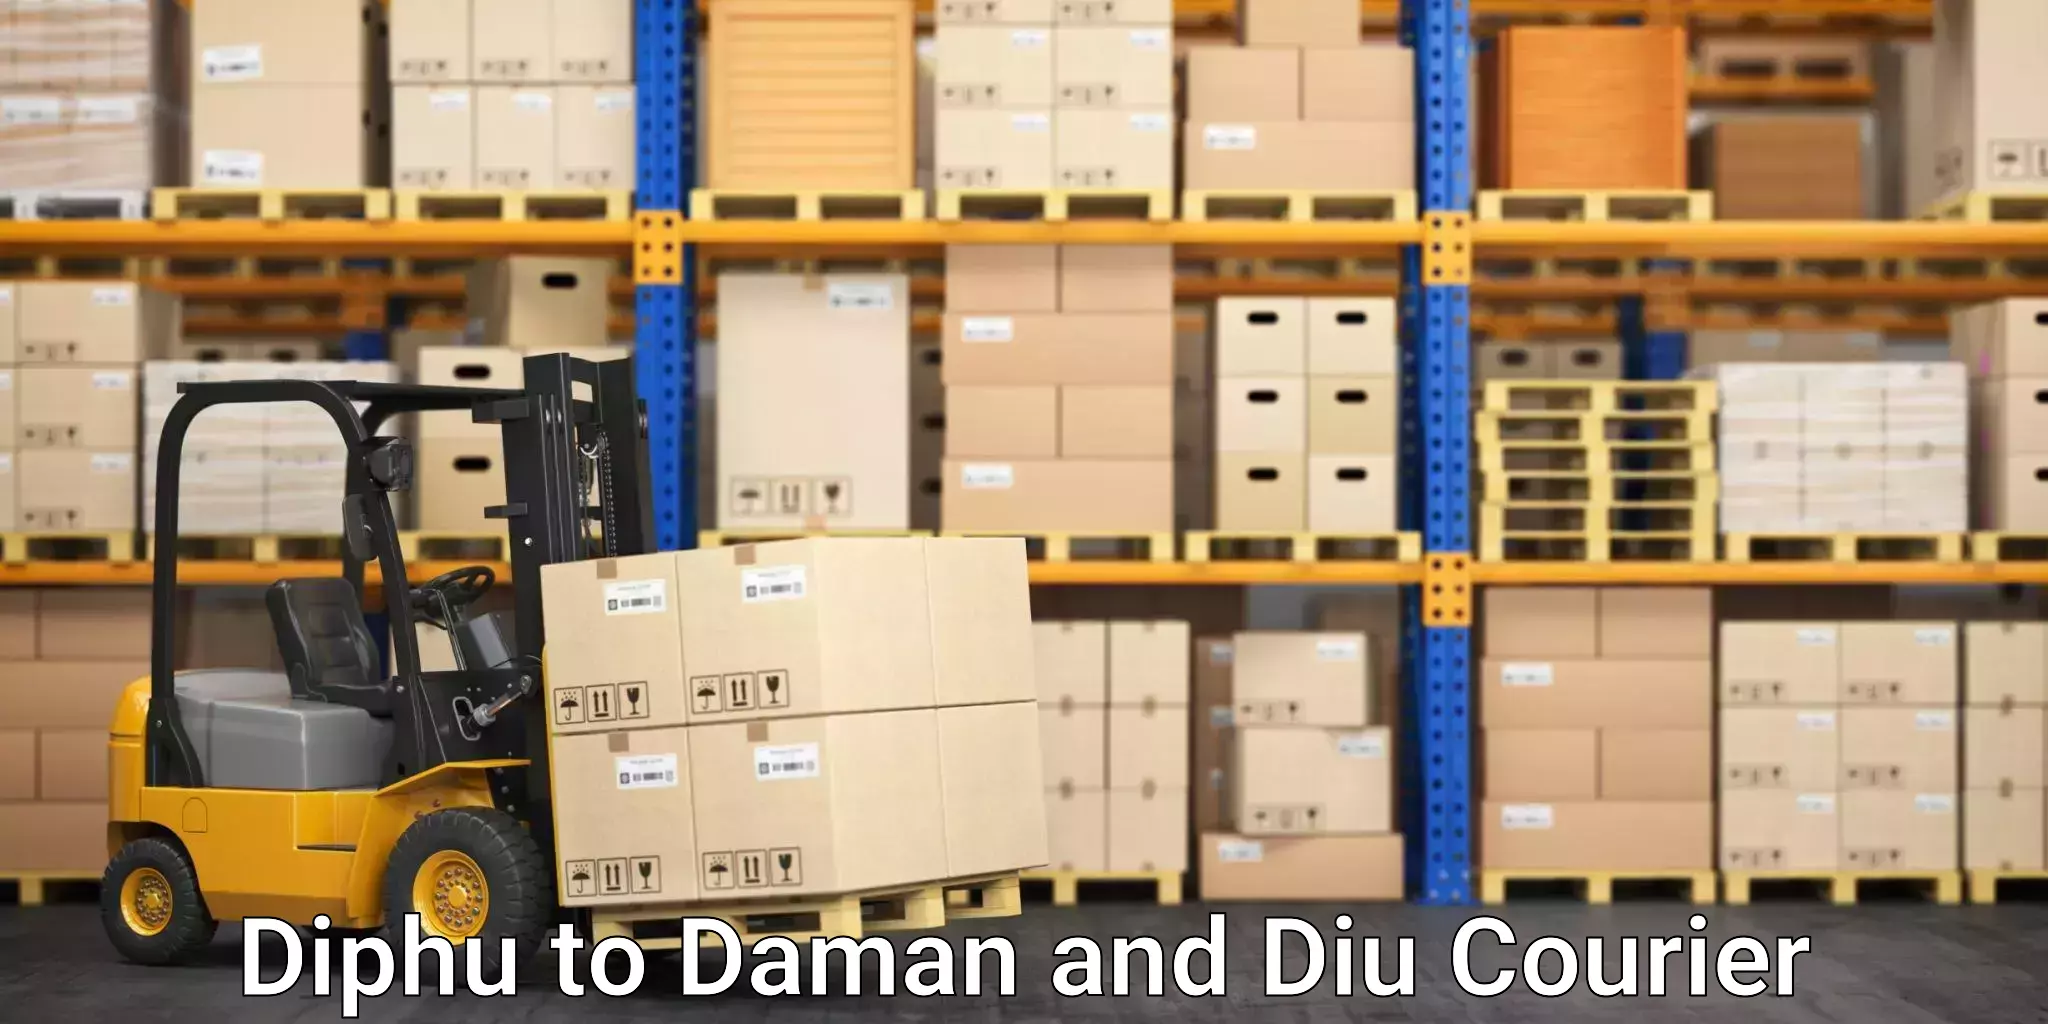 Comprehensive shipping network Diphu to Diu